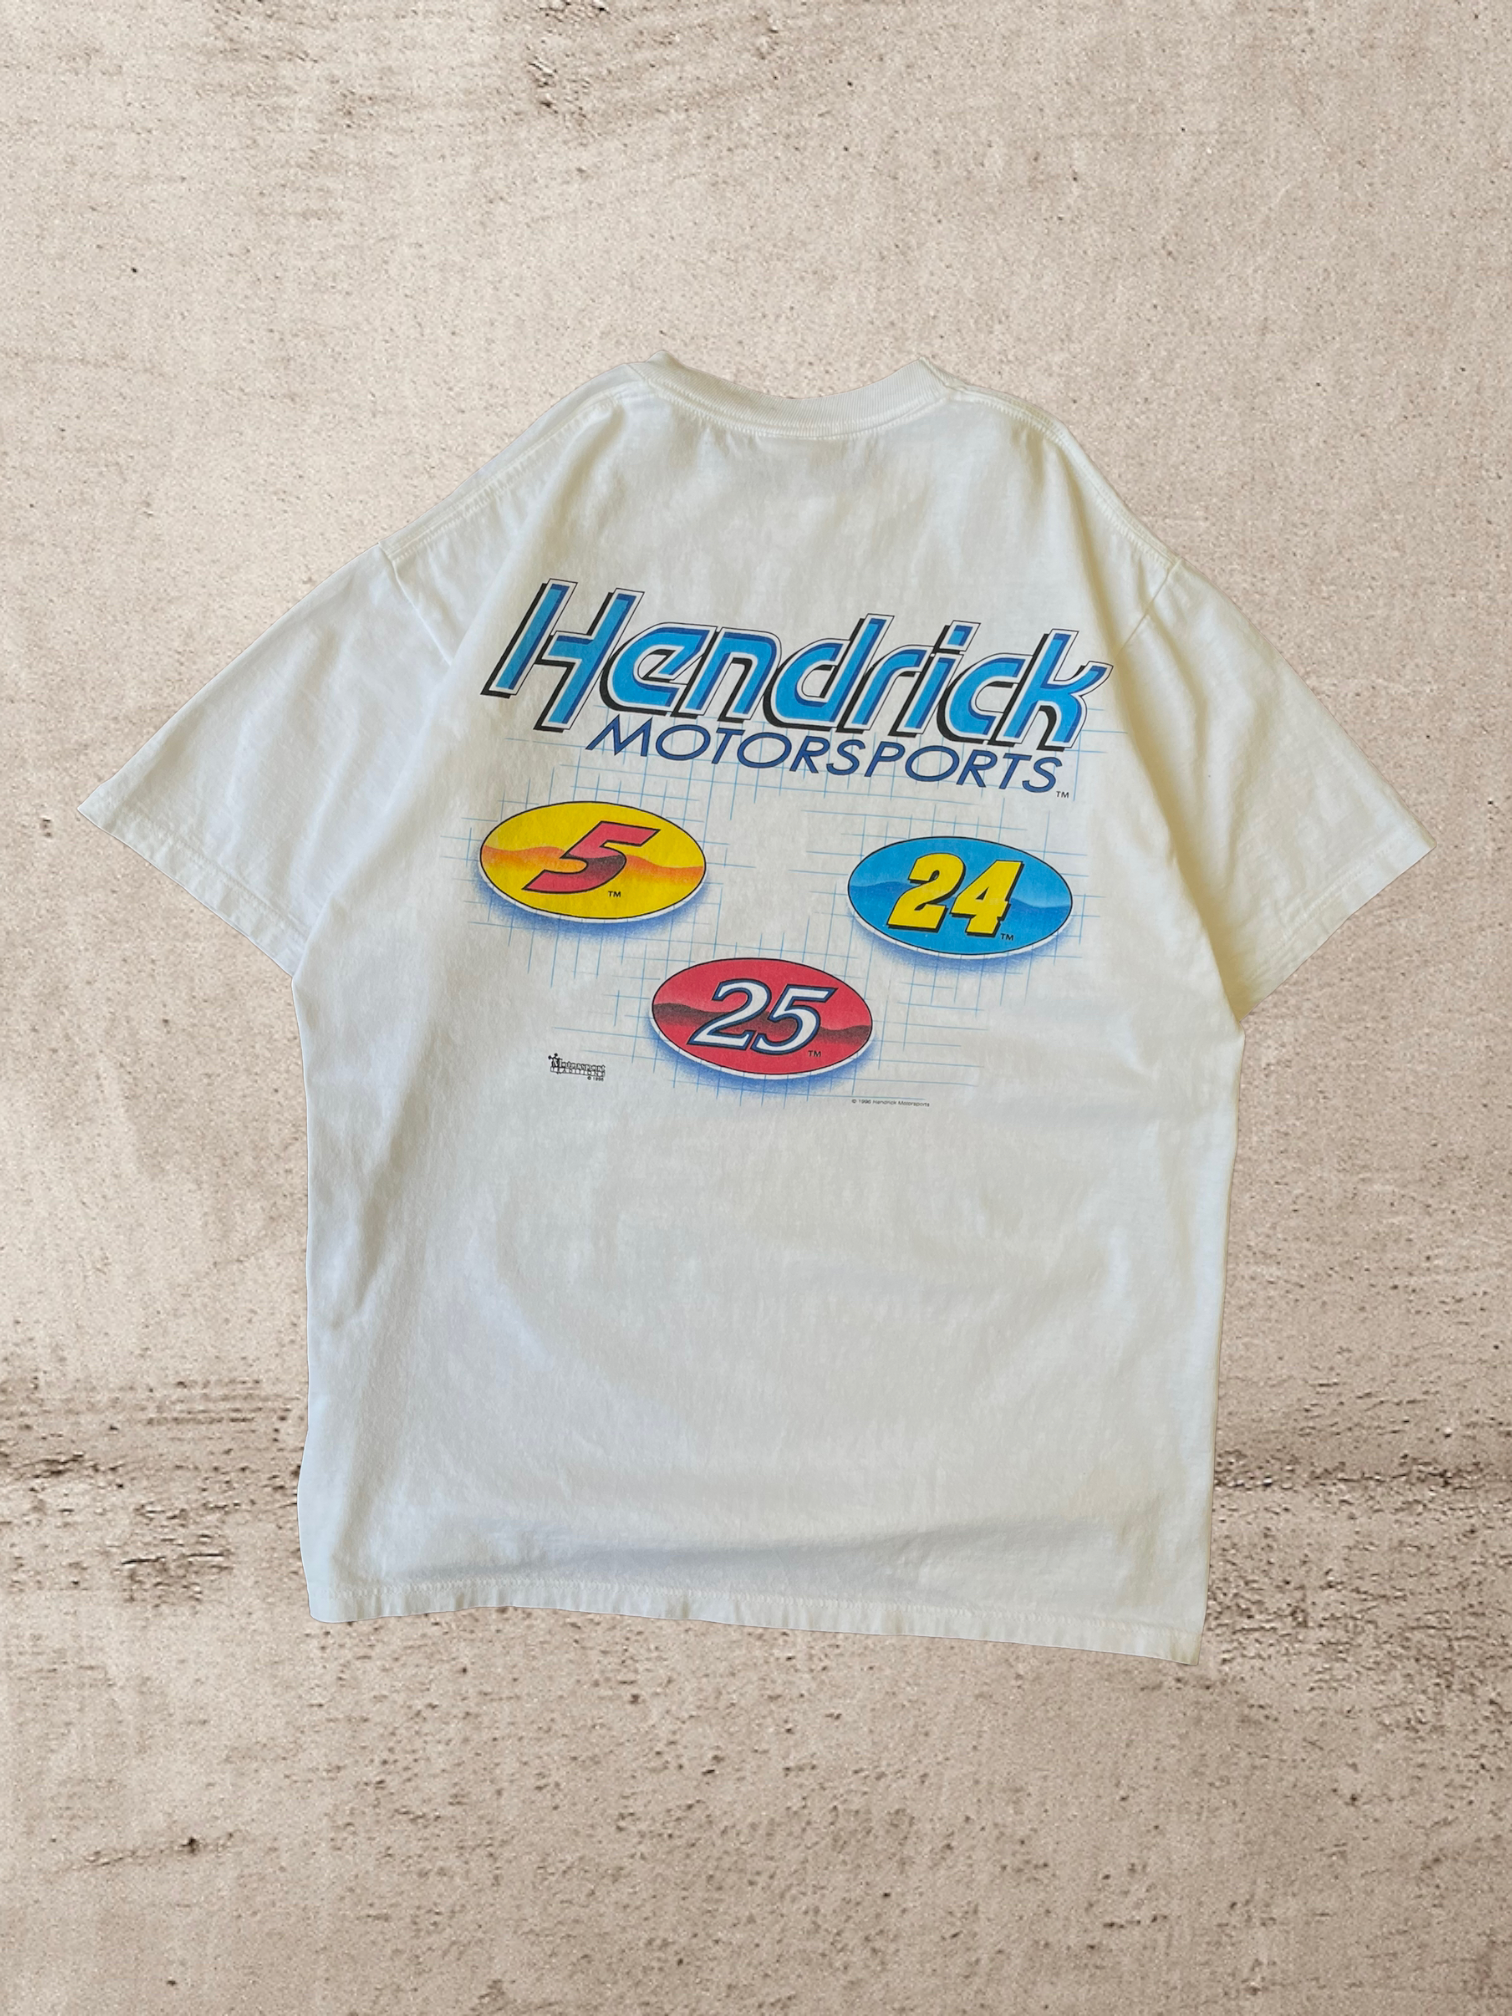 1996 Hendrick Motorsports Racing T-Shirt - Large